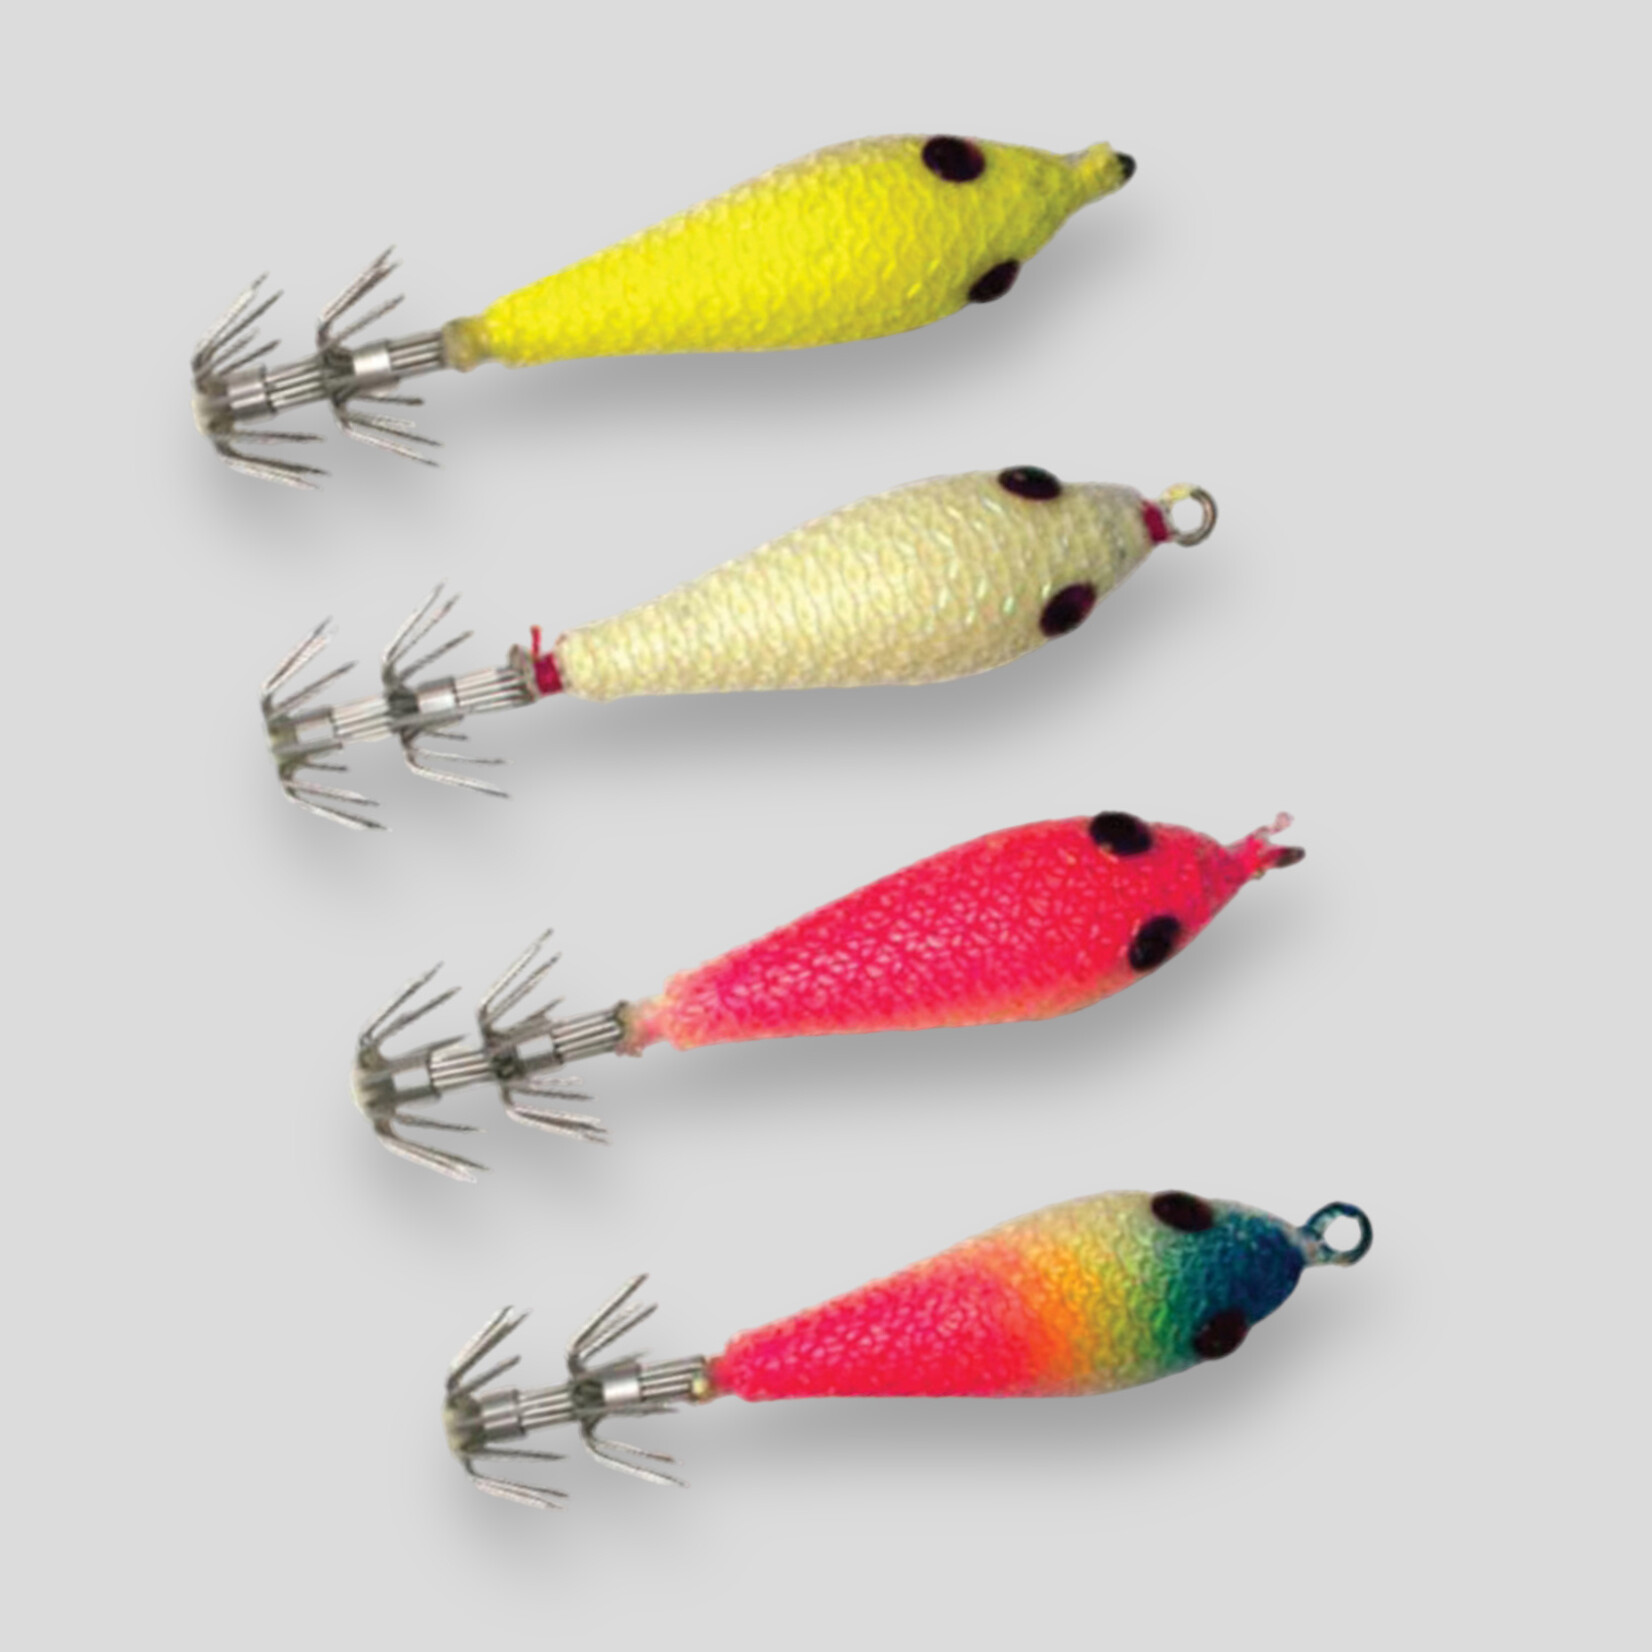 4 Fishing Squid Jig - 50 pieces (Bulk Pack)